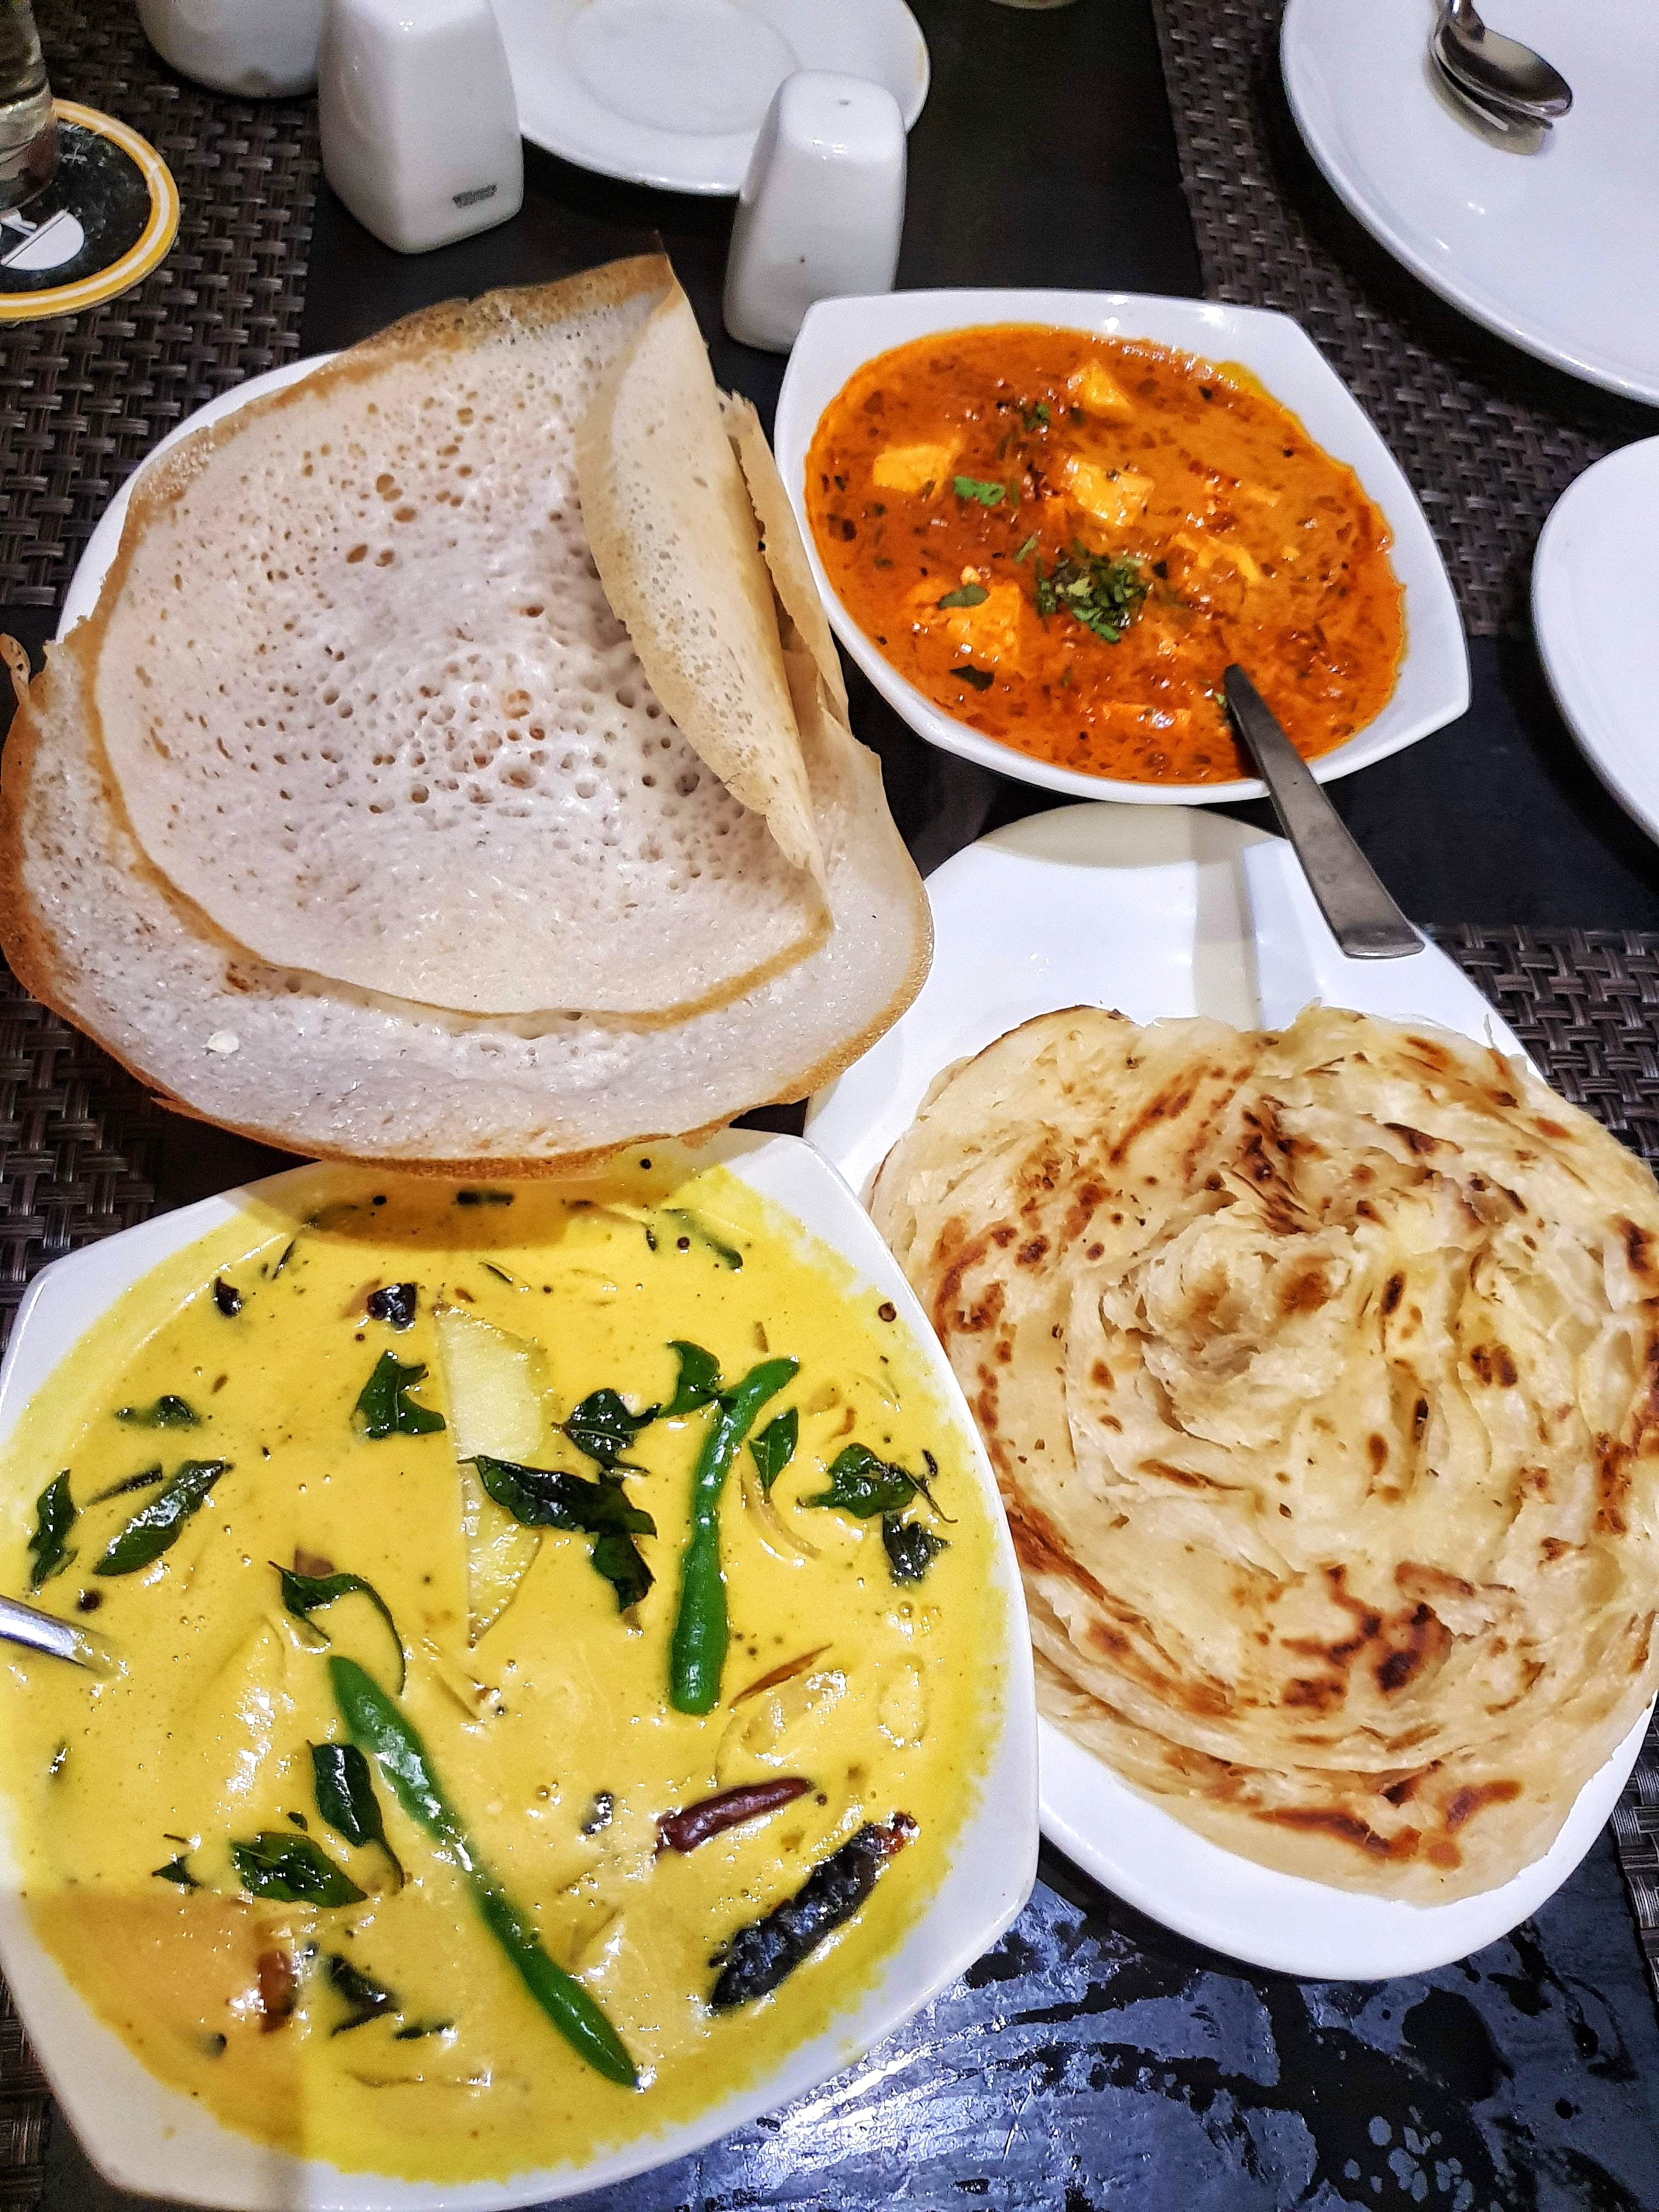 Dish,Food,Cuisine,Naan,Ingredient,Roti,Punjabi cuisine,Produce,Roti canai,Flatbread